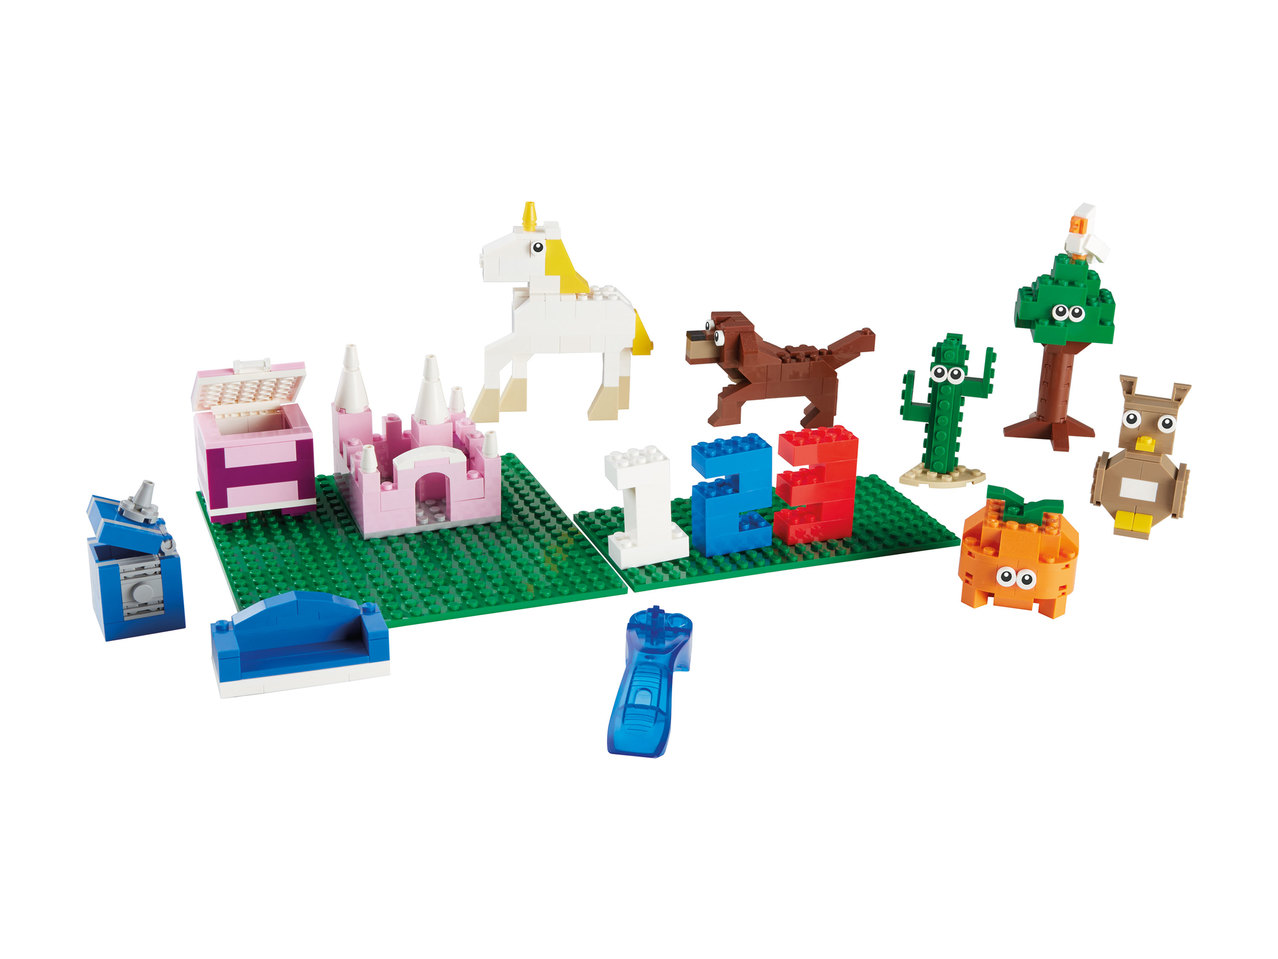 Playtive Colourful Building Brick Set1